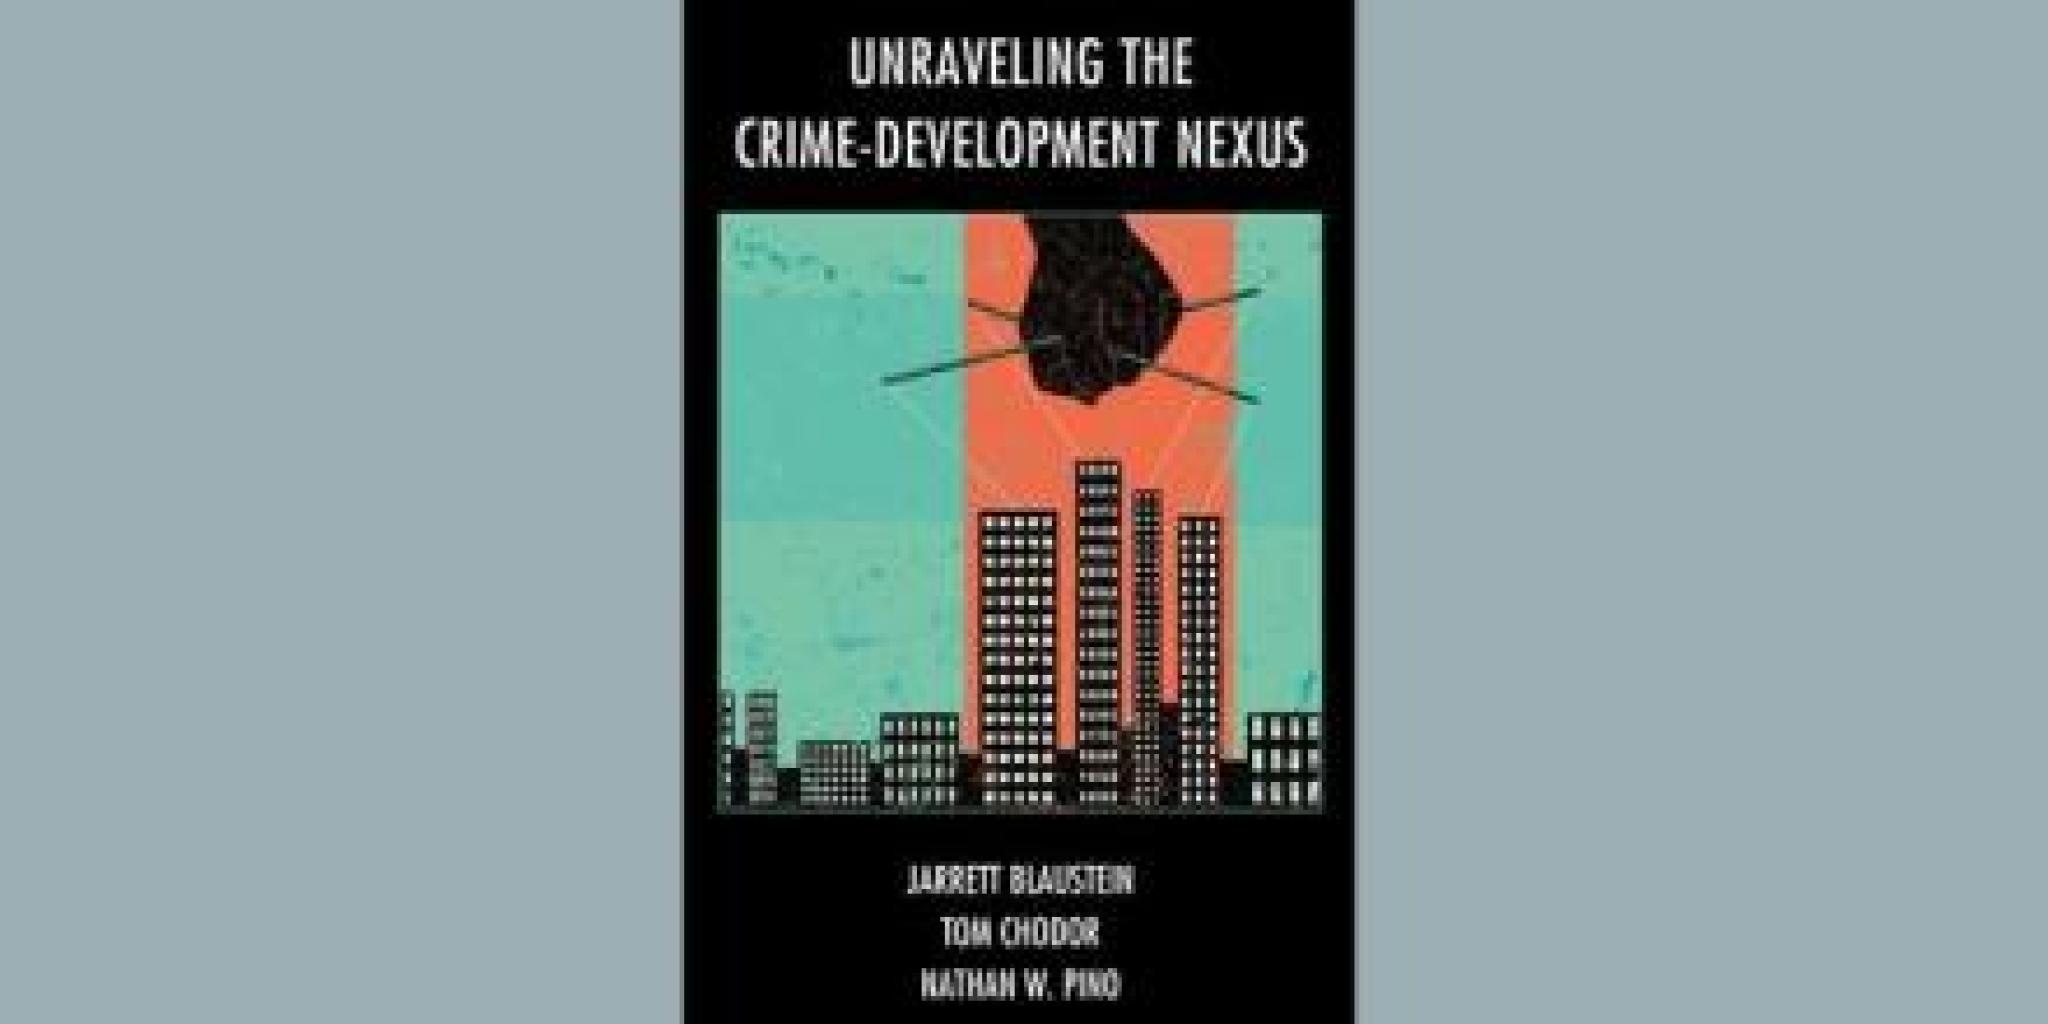 Image: Unraveling the crime-development nexus, book cover